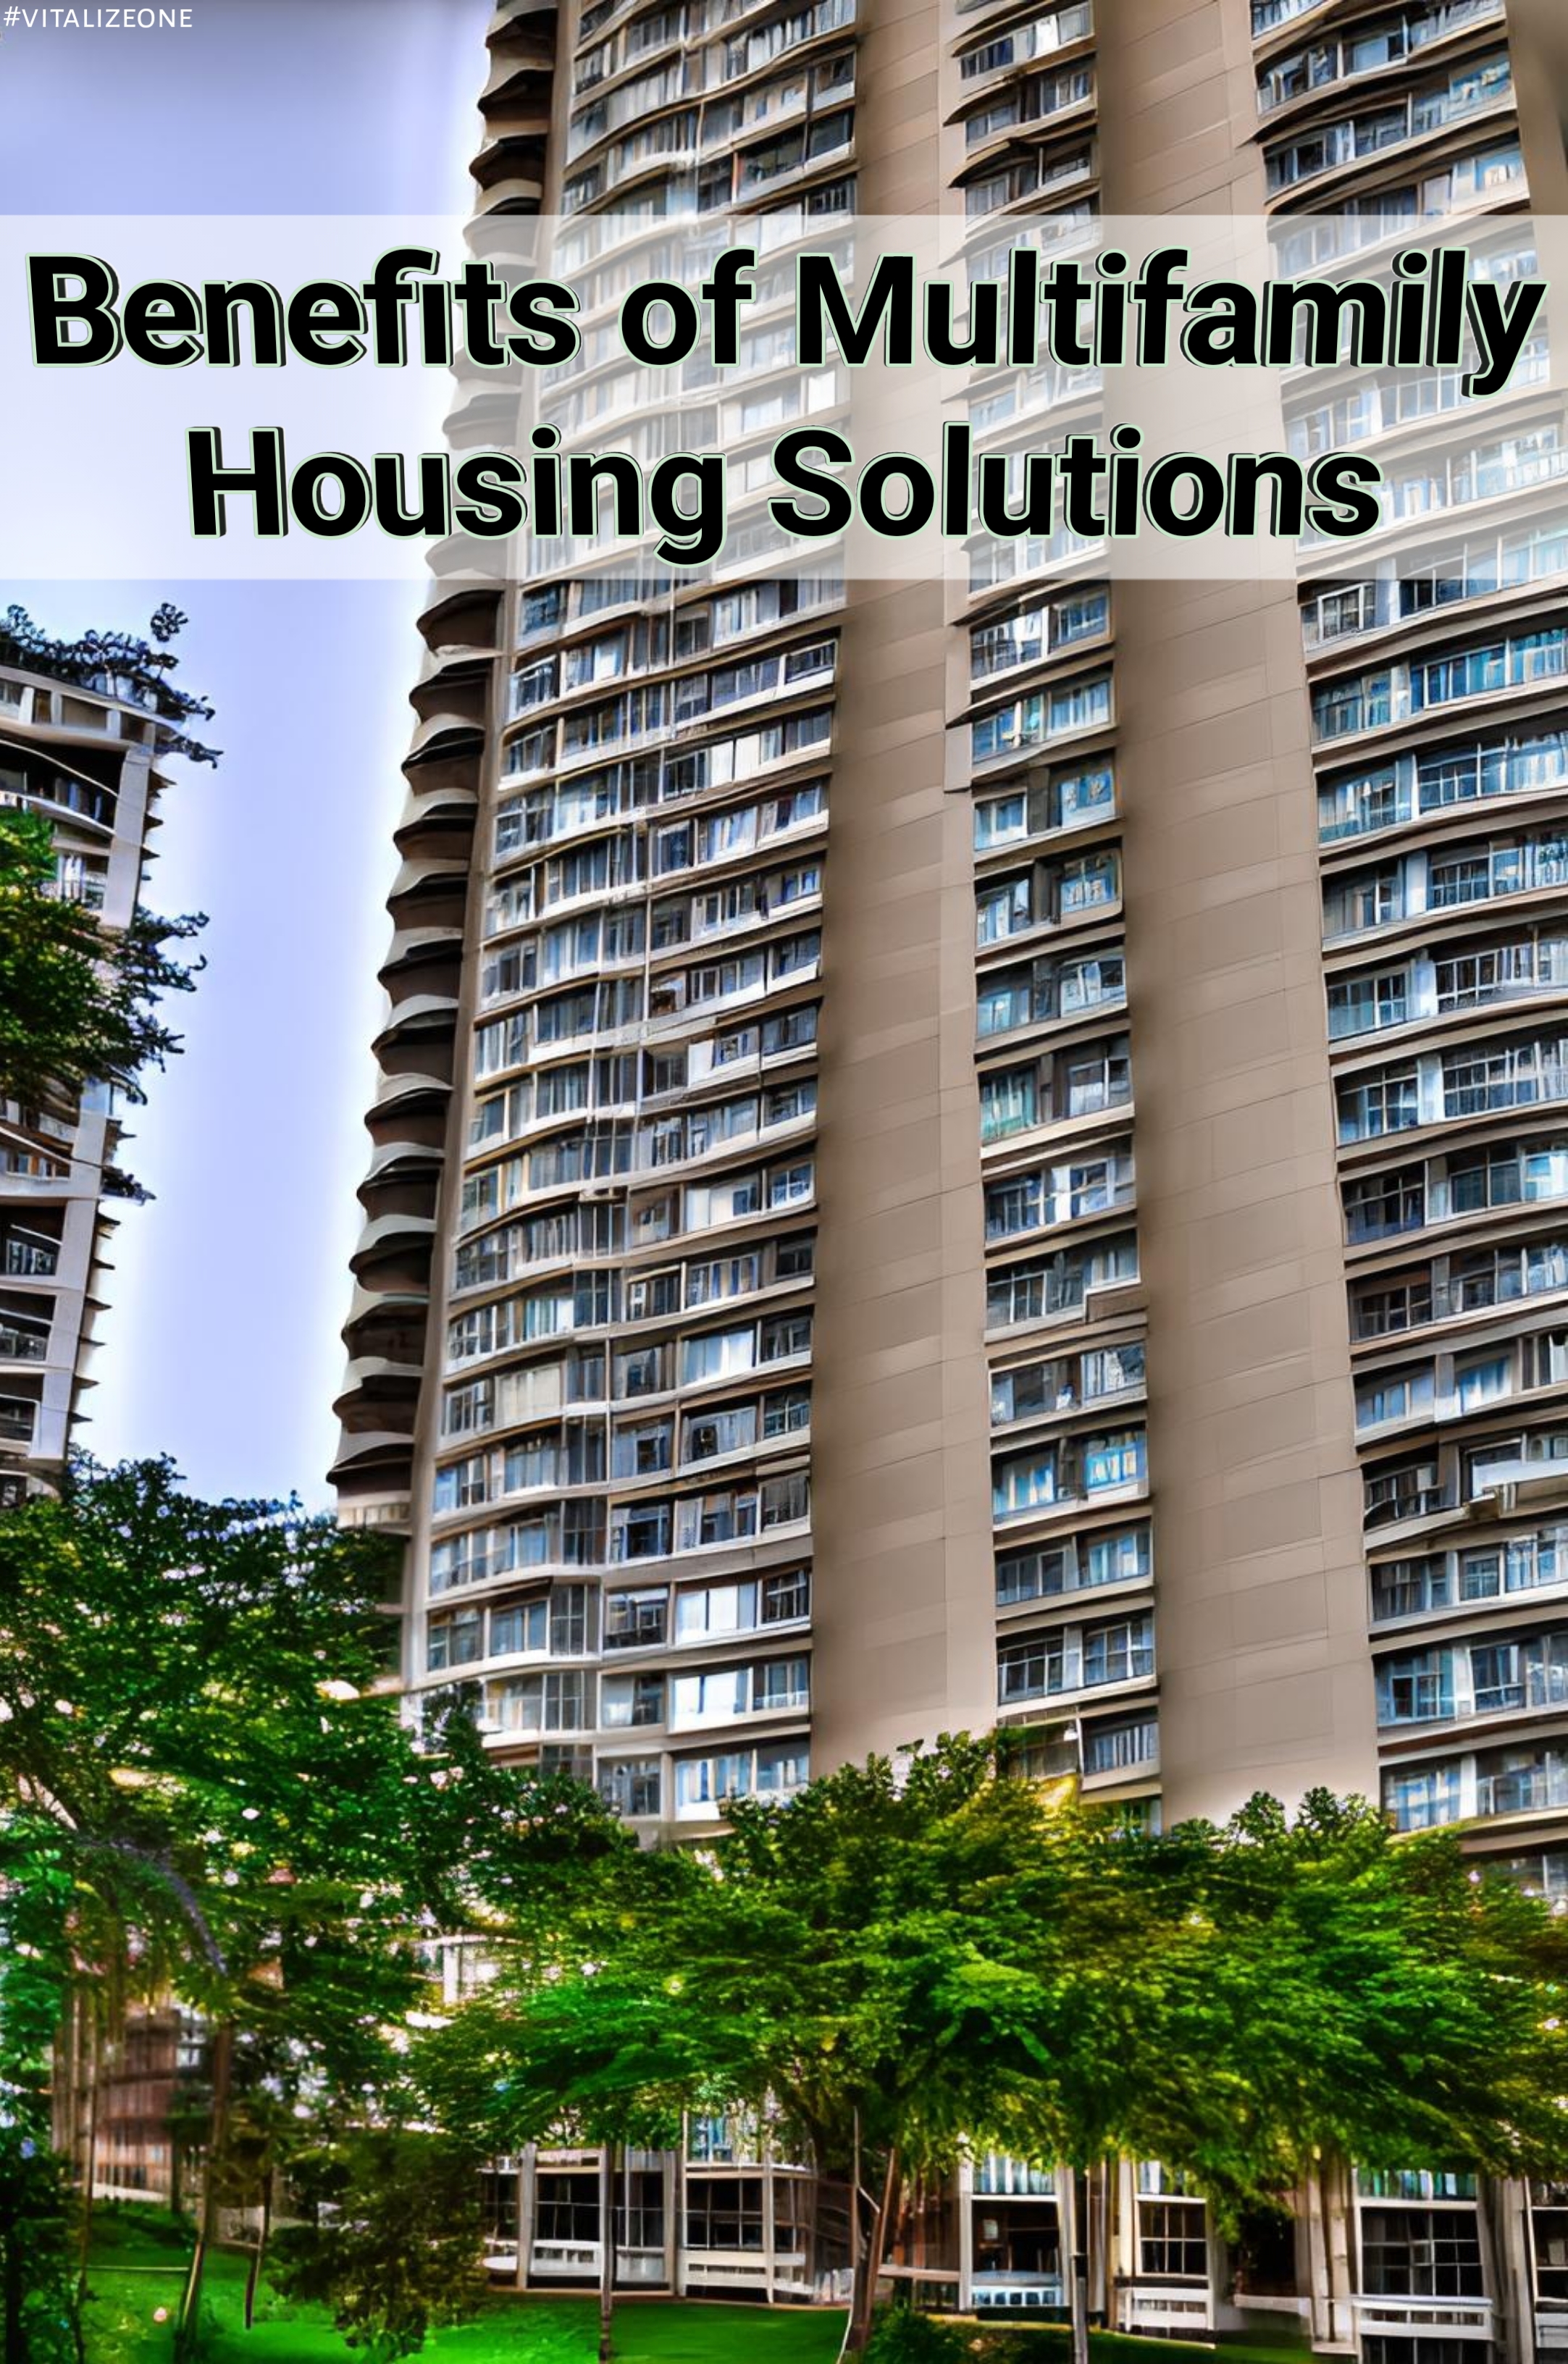 The Top 5 Benefits Of Multifamily Housing Solutions | VitalyTennant.com | #vitalizeone | publishing@vitalytennant.com 